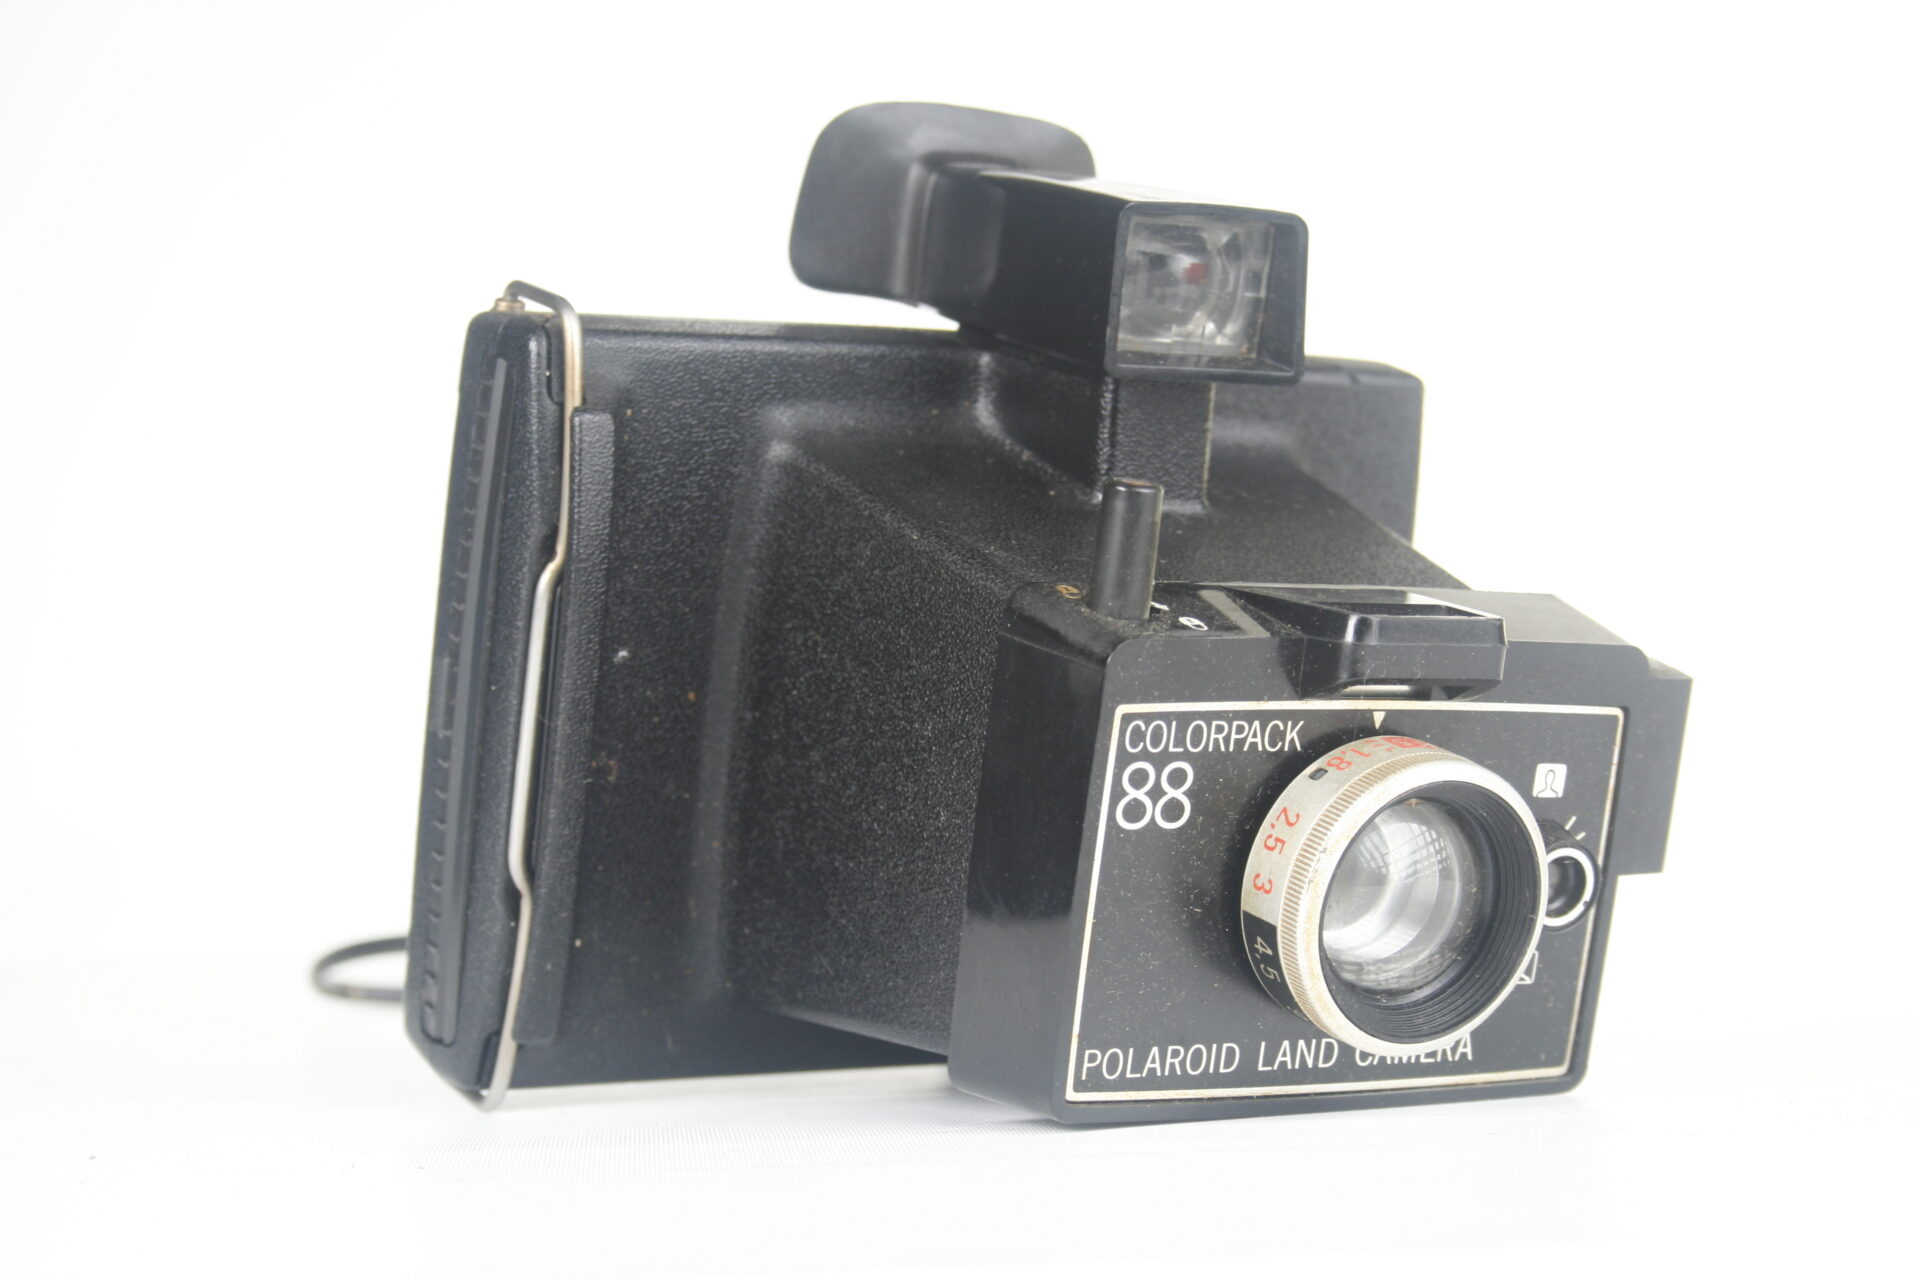 Polaroid Colorpack 88 landcamera. 80 Series Land Packfilm. 1971-1975. USA